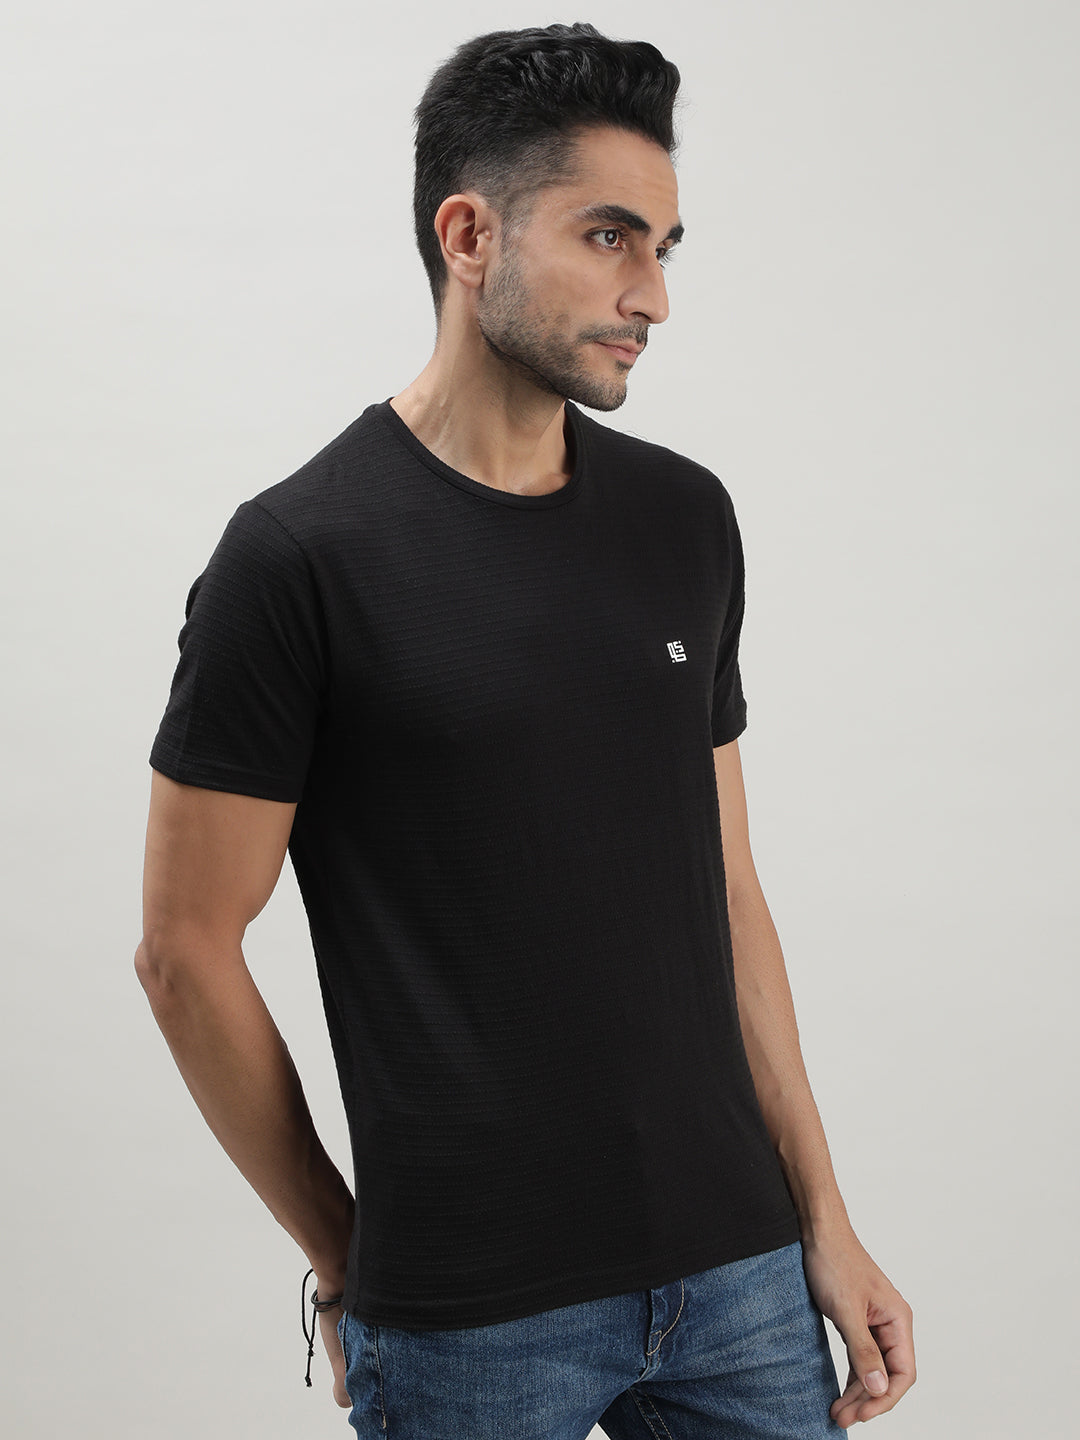 Buy Black Solid Crew Neck T-shirt for Men Online at Loom & Spin